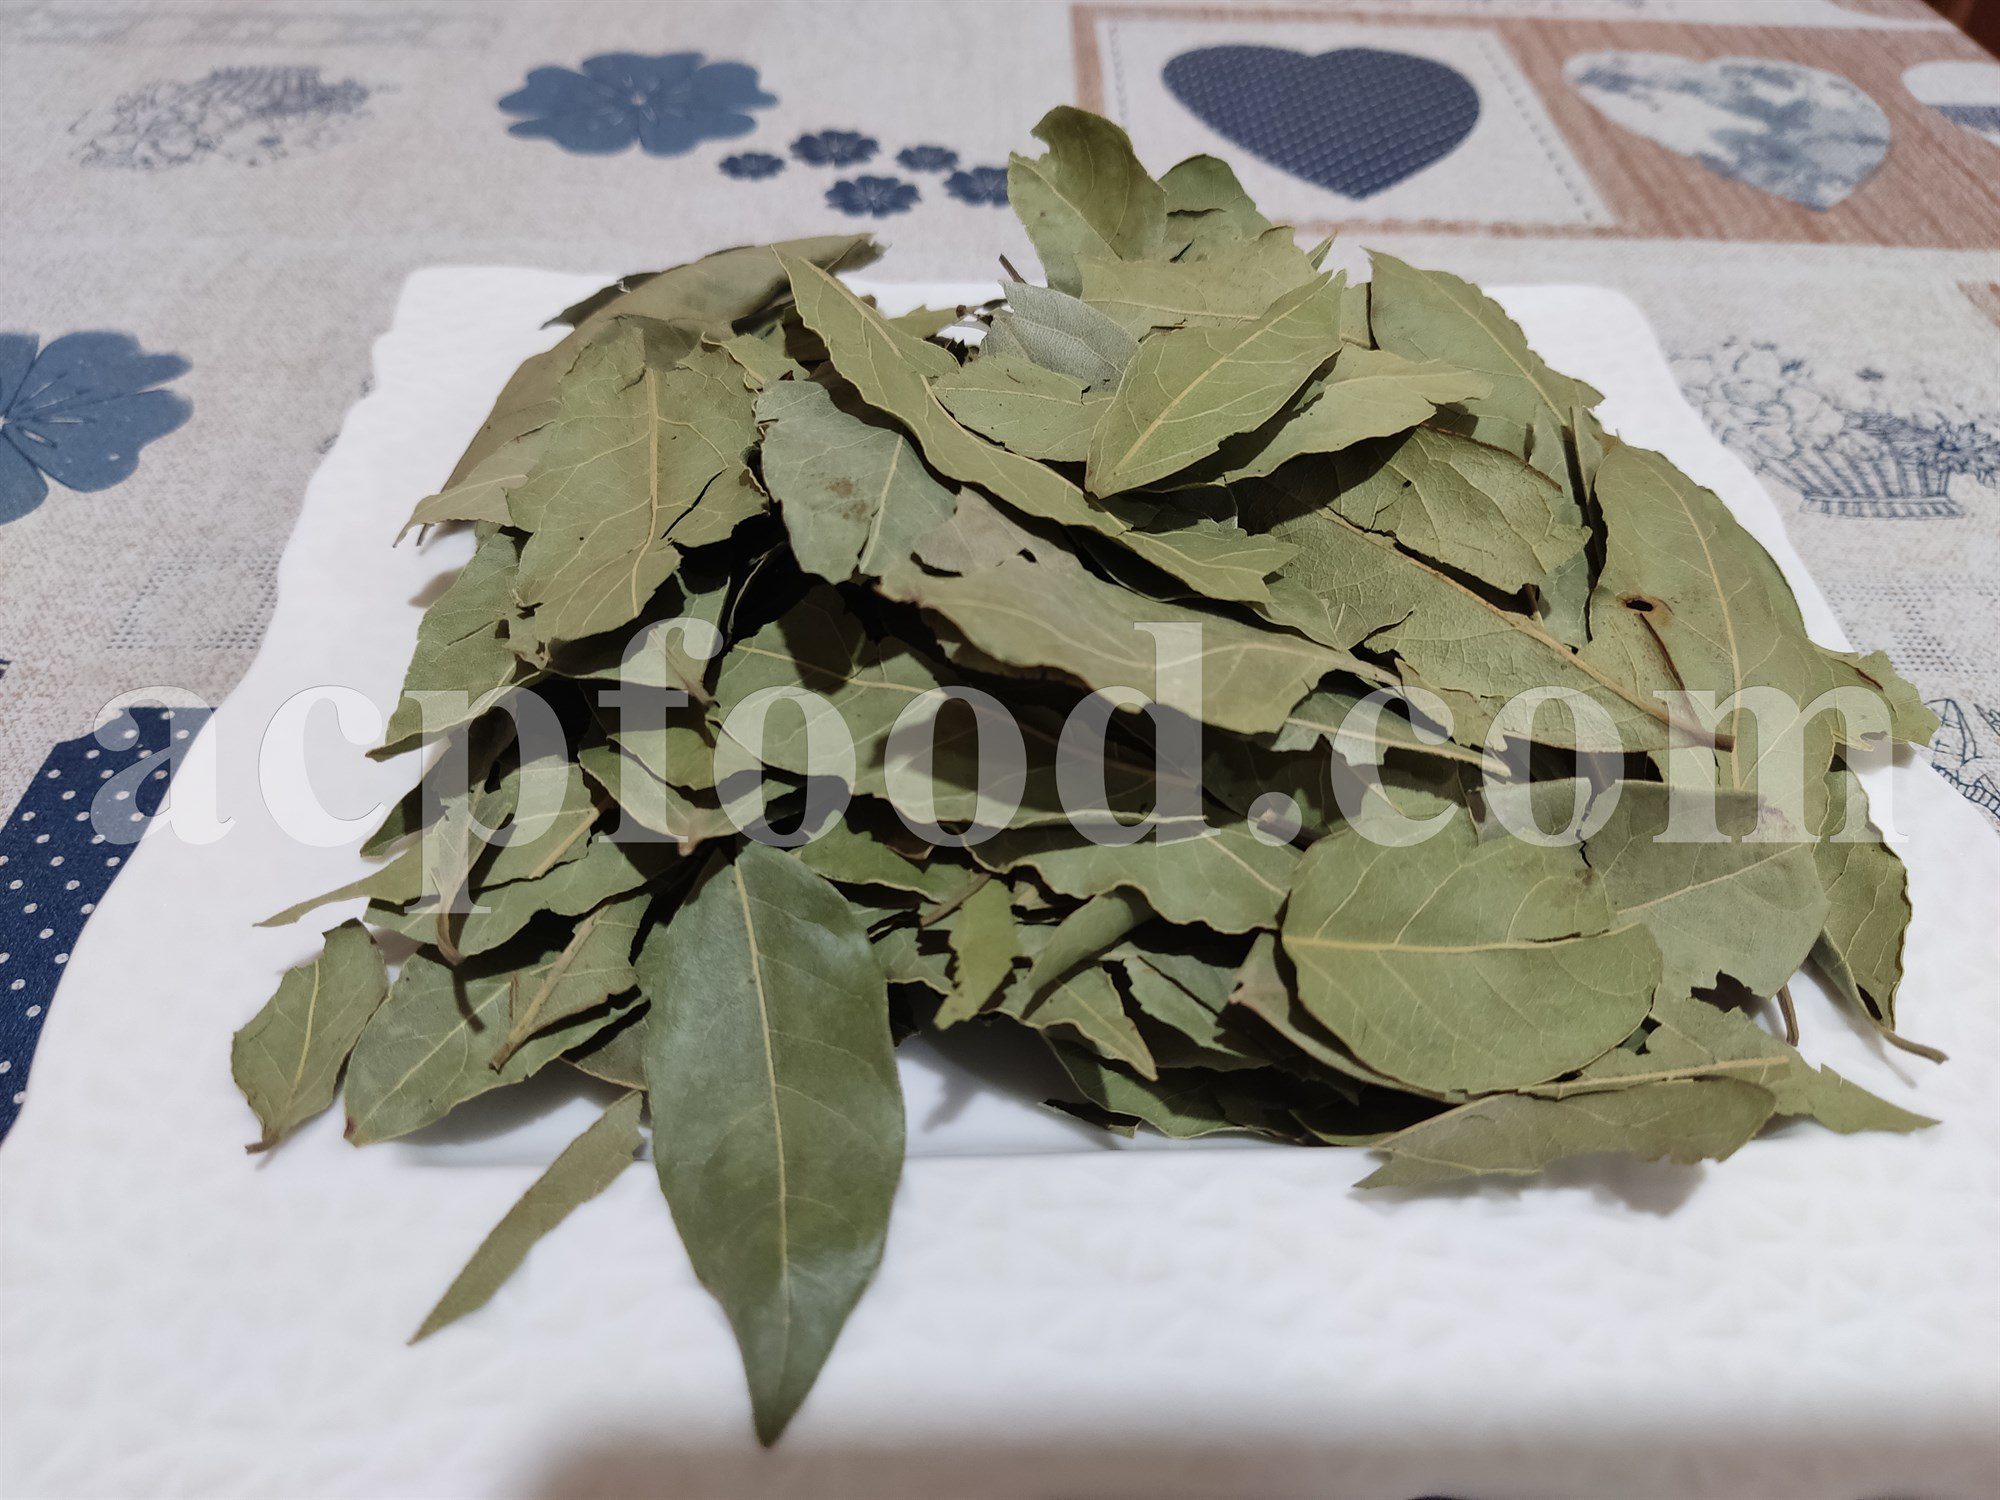 Bulk Bay Leaves for sale. Laurus nobilis Leaves Wholesaler, Supplier, Exporter and Provider. Buy High Quality Bay Laurel Leaf with the Best Price.